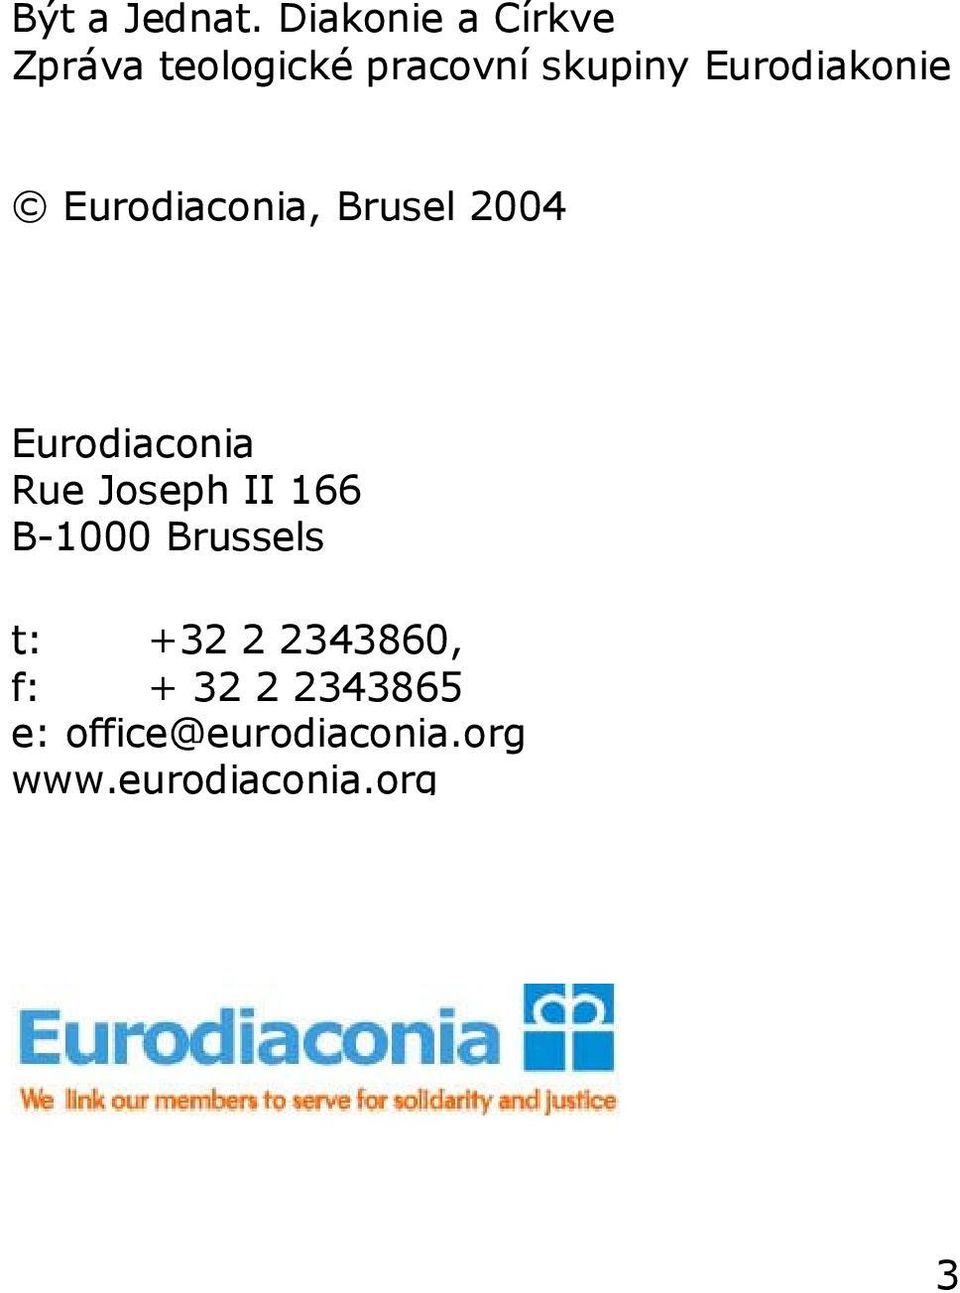 Eurodiakonie Eurodiaconia, Brusel 2004 Eurodiaconia Rue